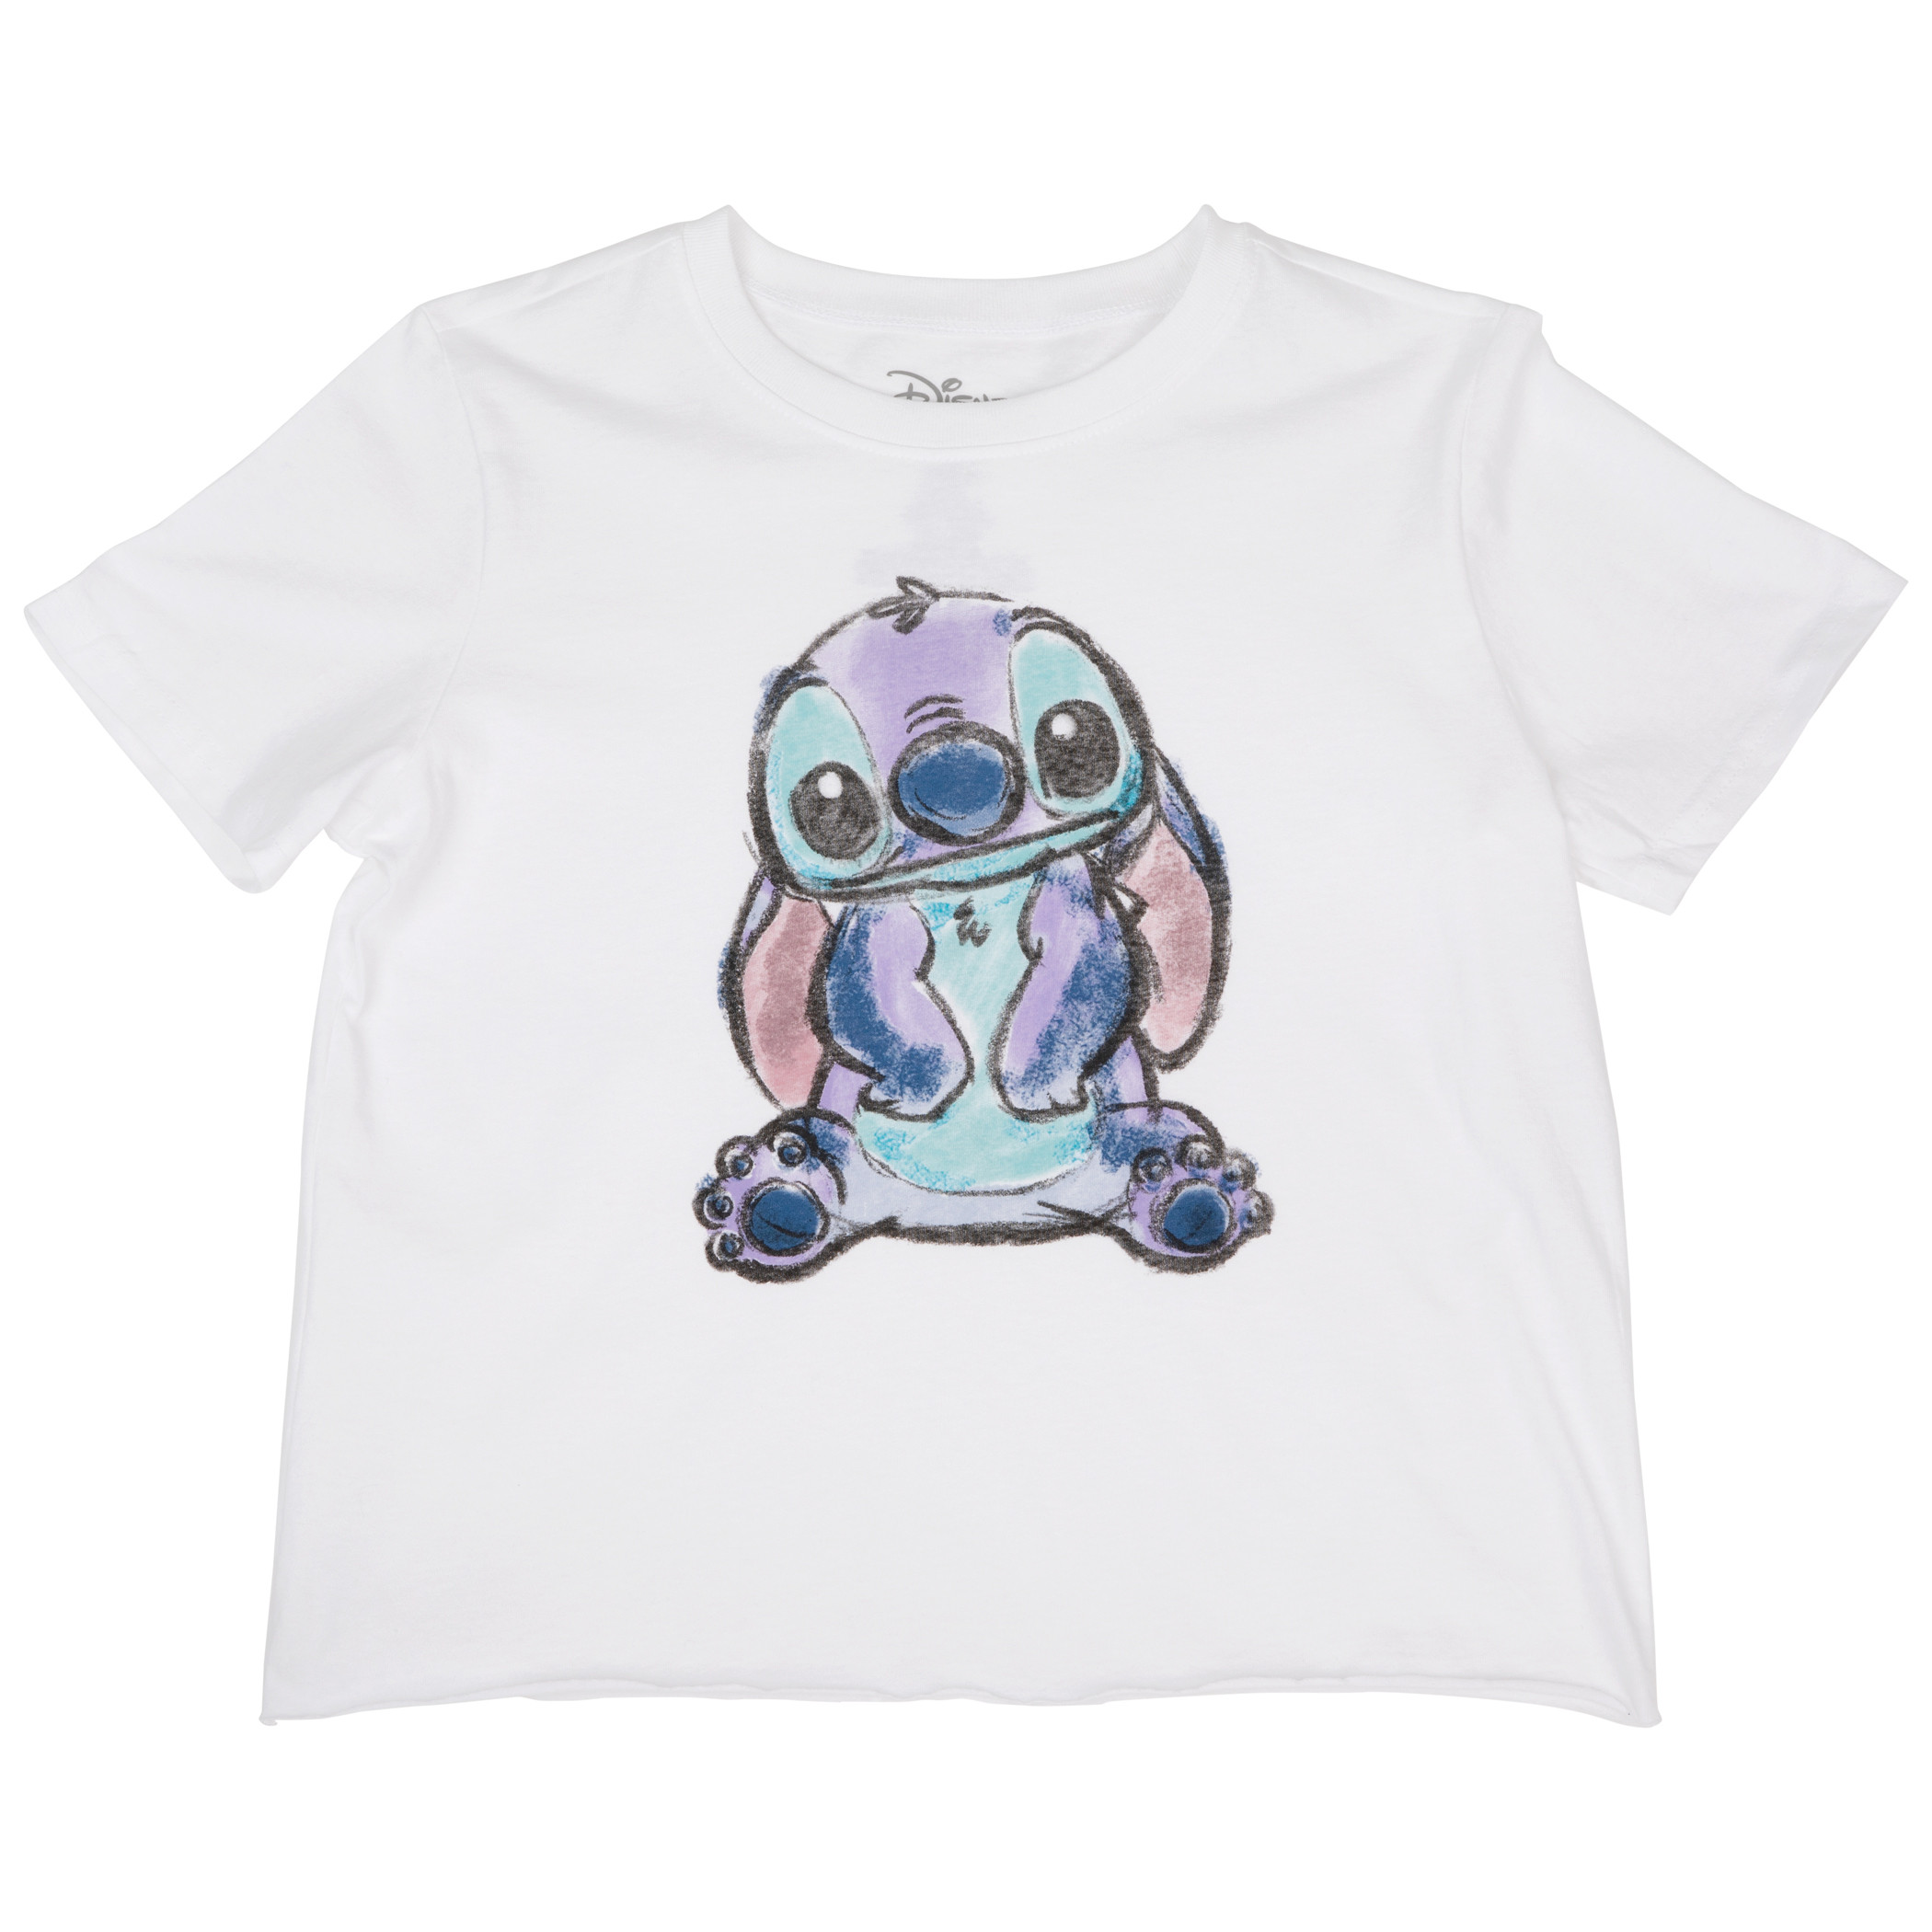 Disney's Lilo and Stitch's Stitch Character Women's T-Shirt